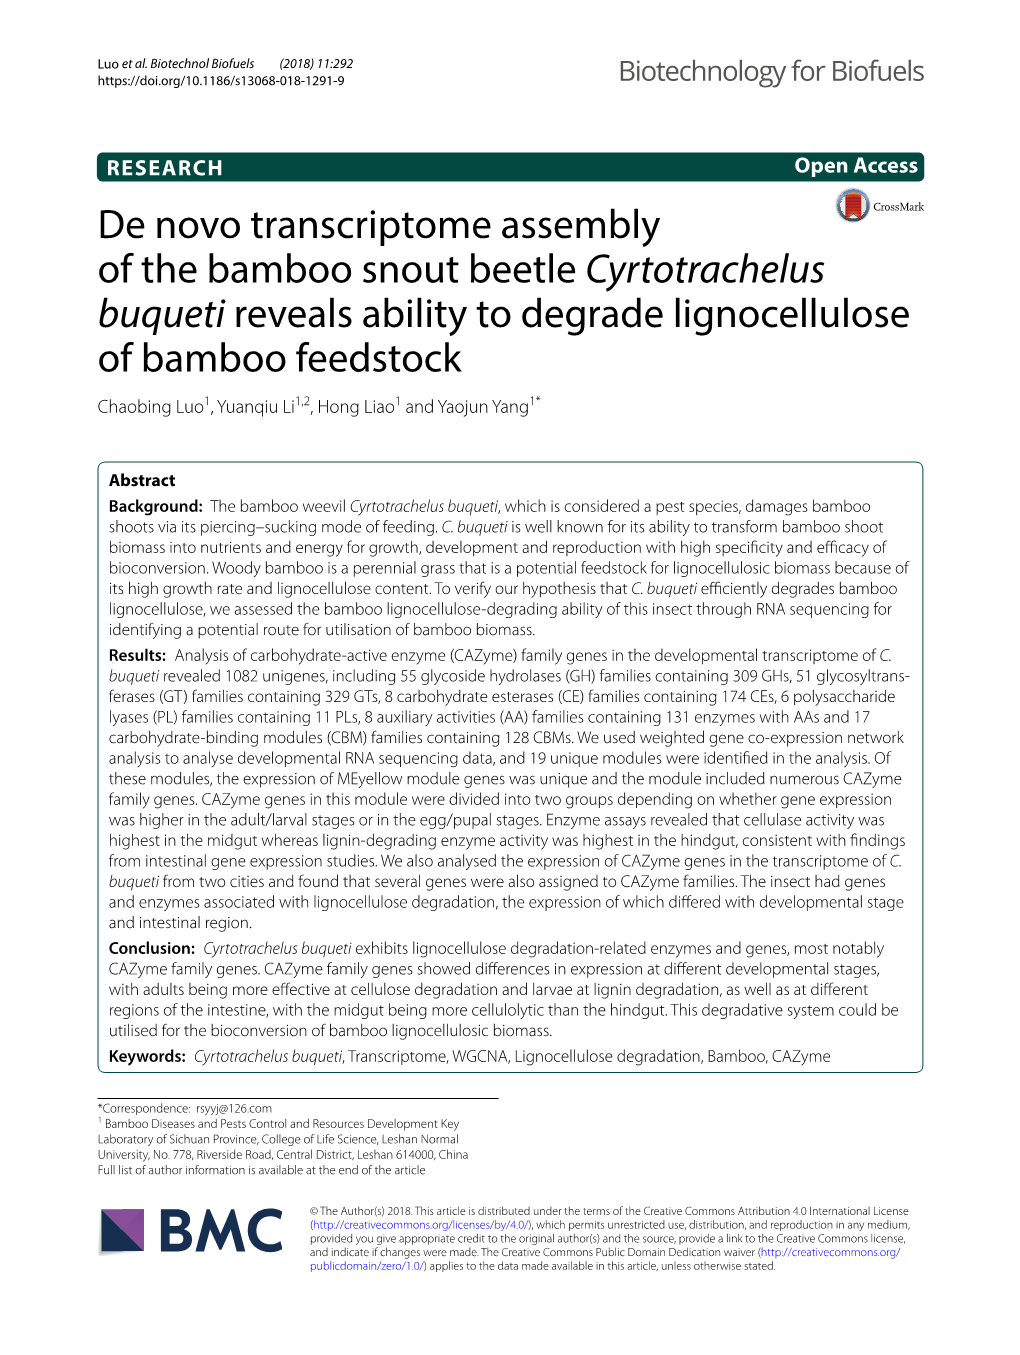 Cyrtotrachelus Buqueti Reveals Ability to Degrade Lignocellulose of Bamboo Feedstock Chaobing Luo1, Yuanqiu Li1,2, Hong Liao1 and Yaojun Yang1*